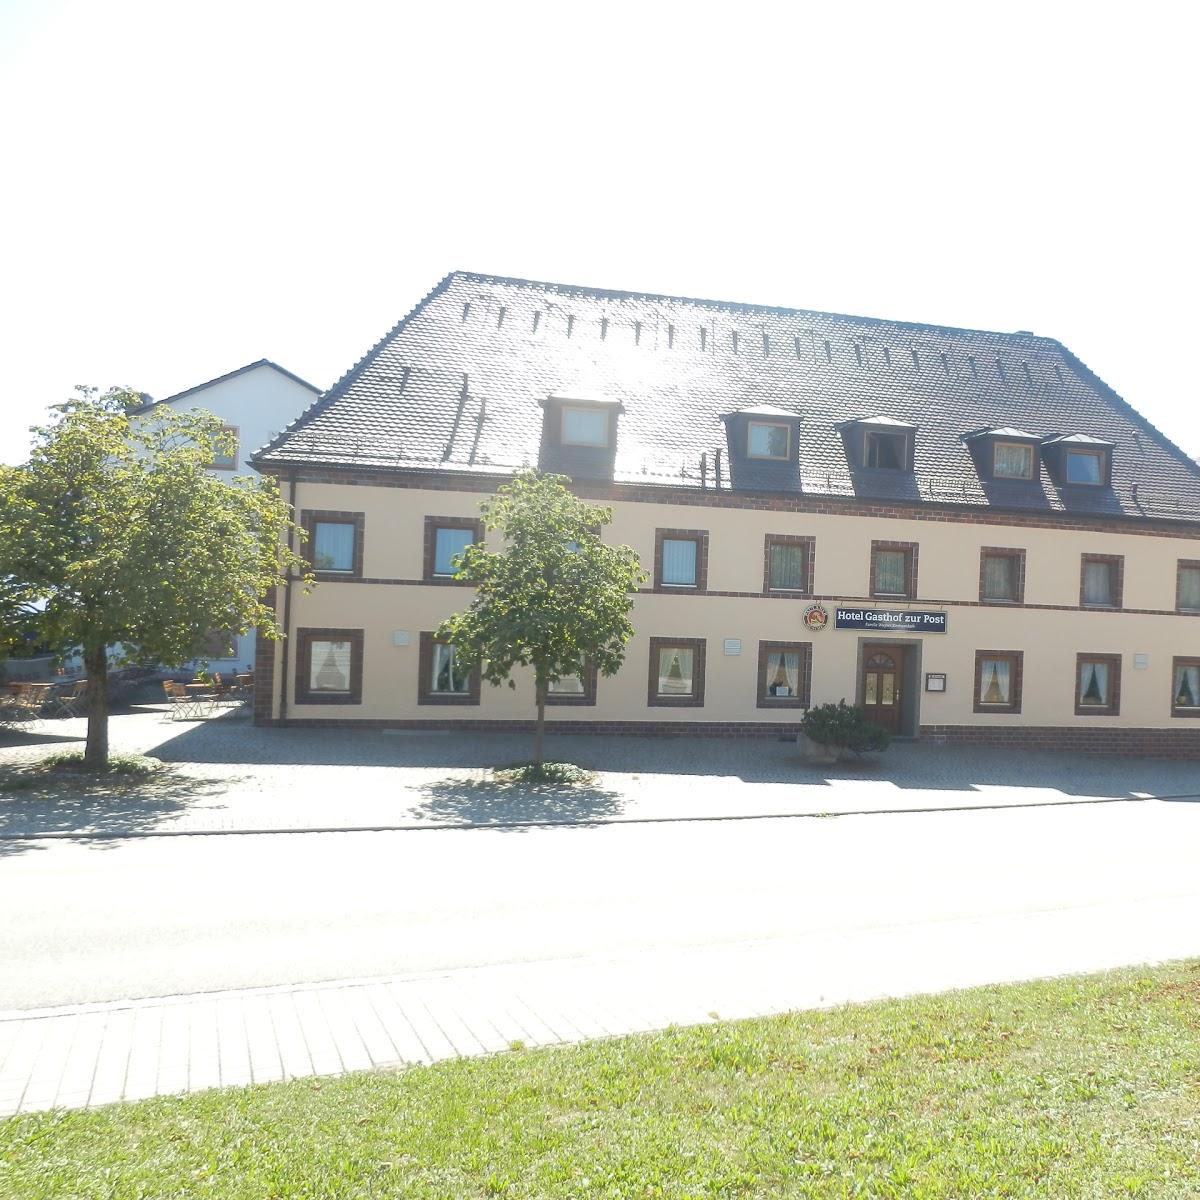 Restaurant "Hotel-Gasthof zur Post Familie Wagner" in  Kirchweidach